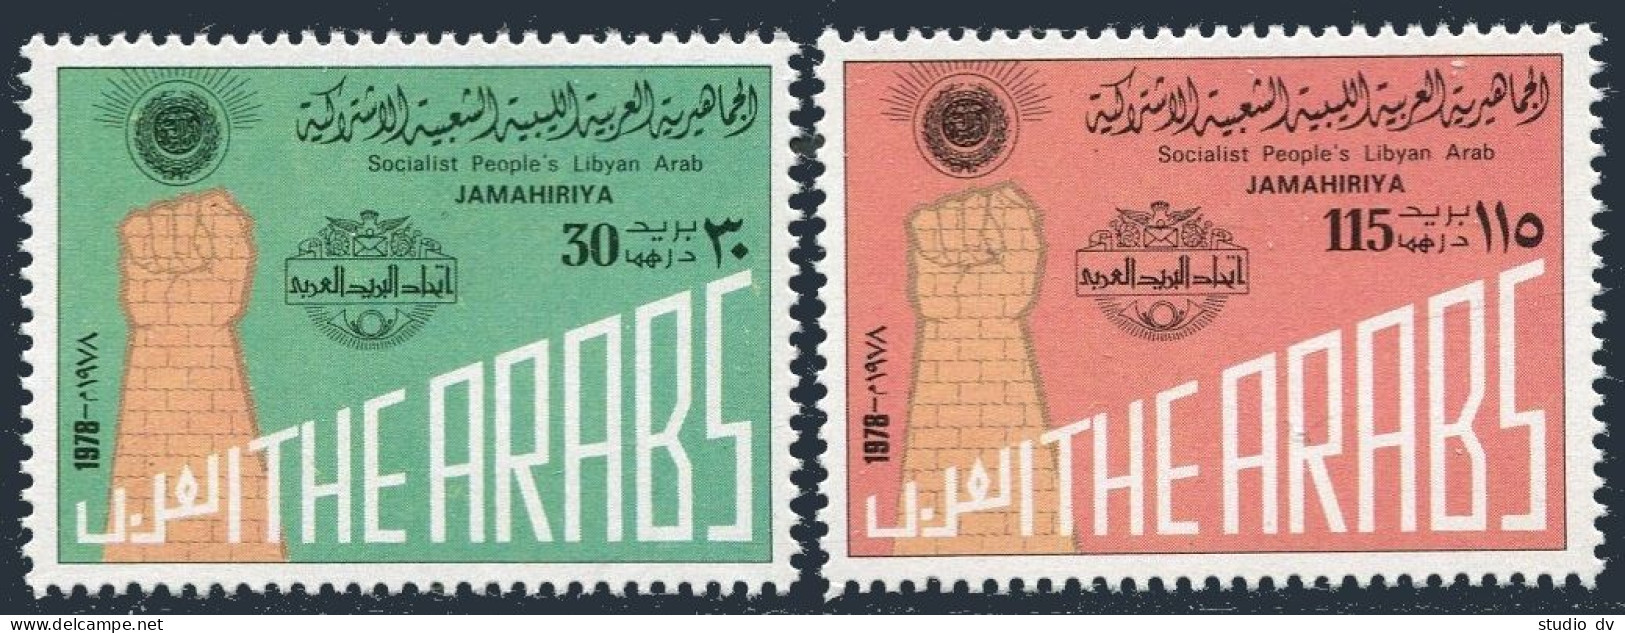 Libya 728-729,MNH.Michel 641-642. Determination Of Arab People,1978. - Libya